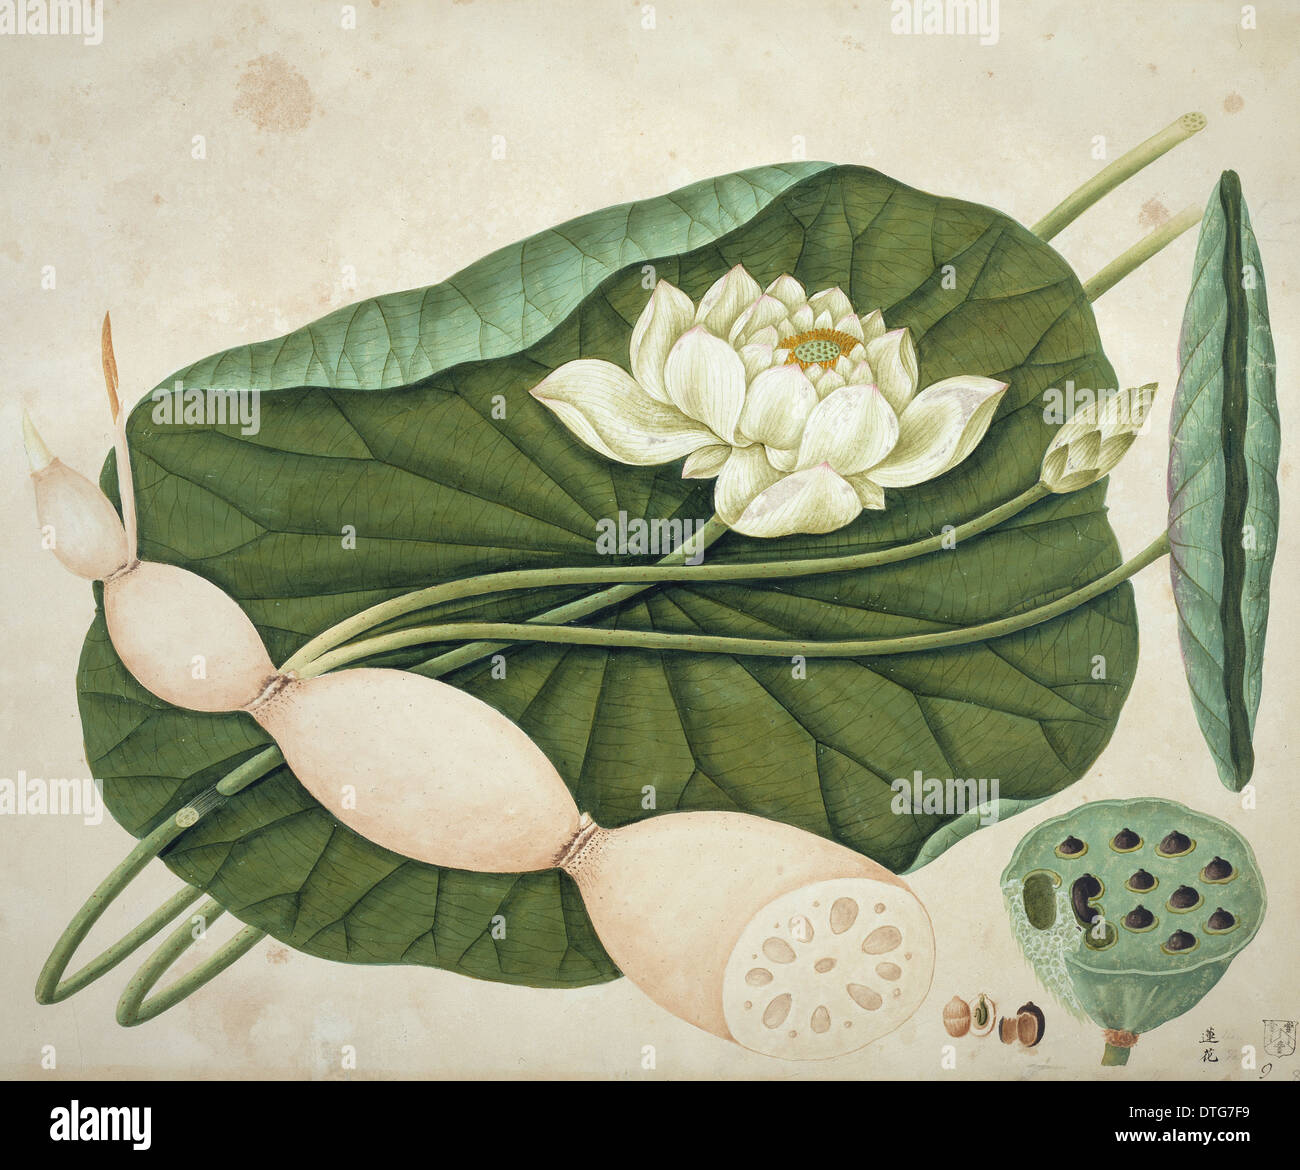 Nelumbo nucifera, sacred lotus Stock Photo